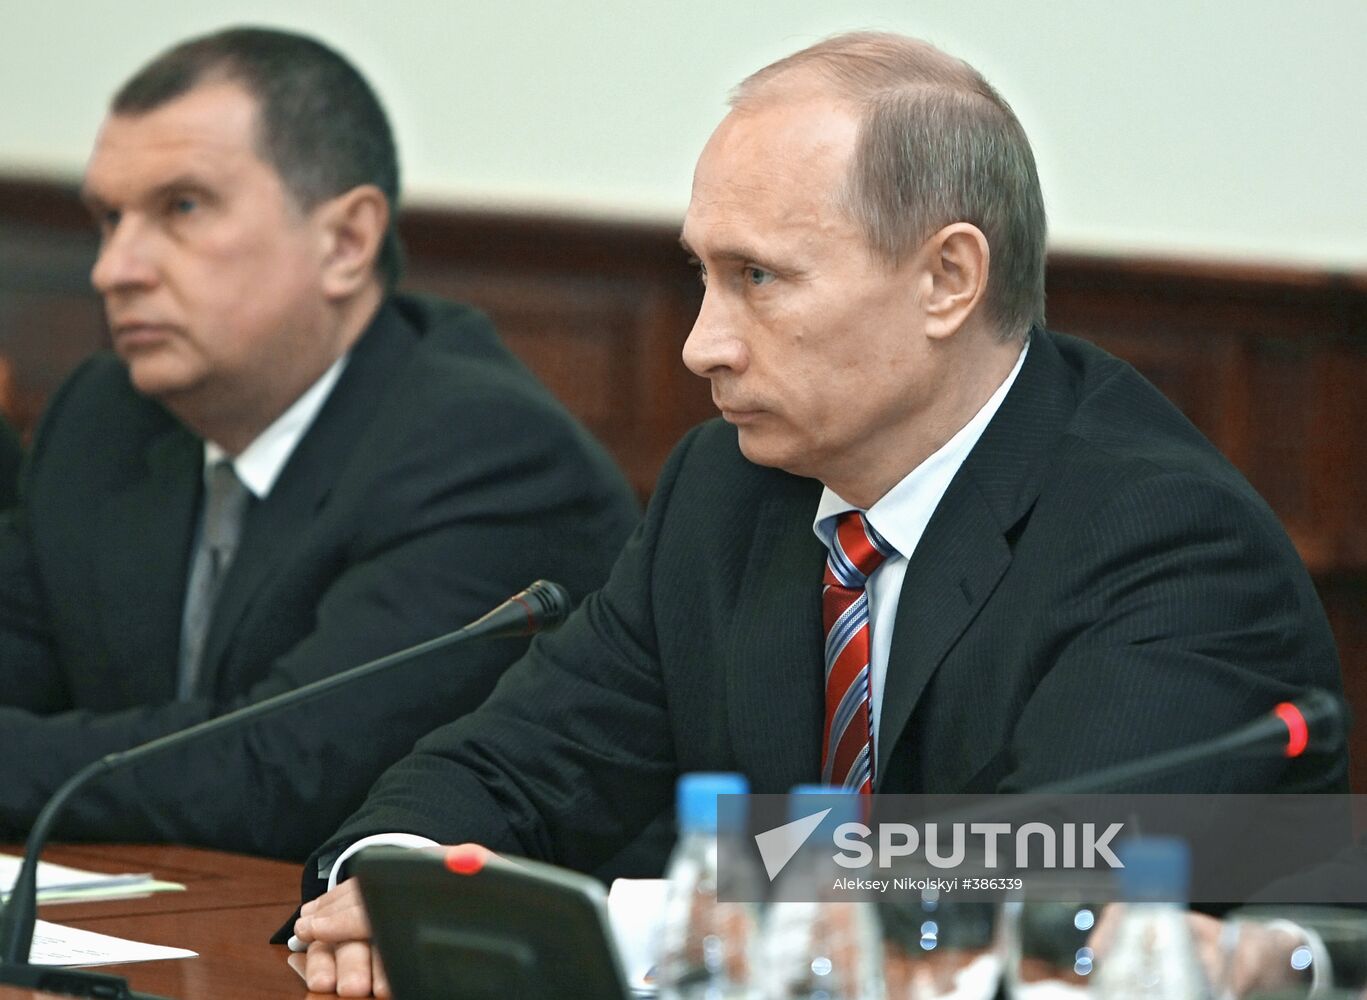 Vladimir Putin meets with Nouri al-Maliki